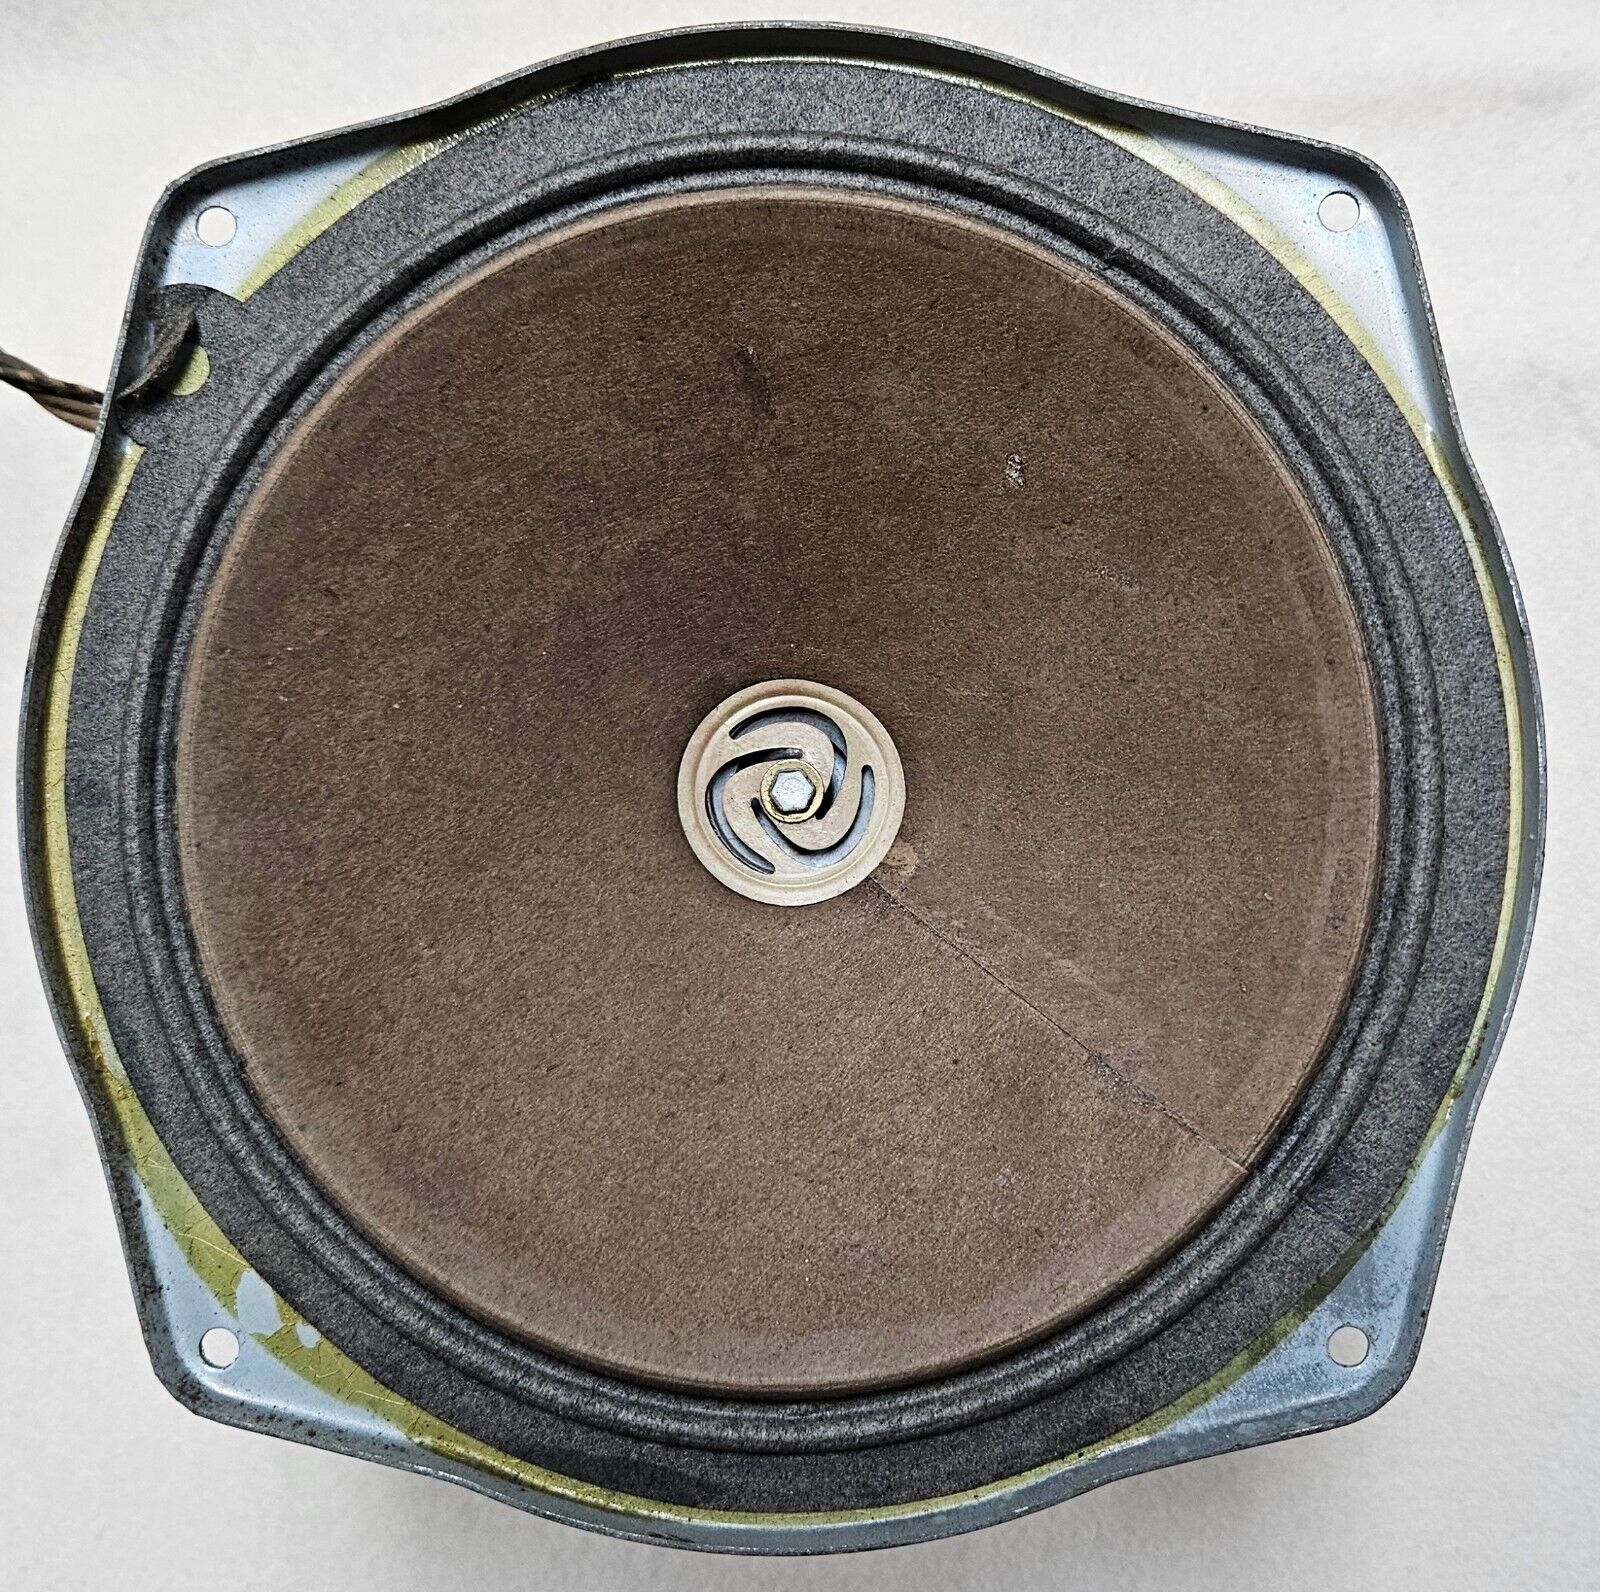 Vintage 8 inch speaker assembly from Philco model 89 (123) tube radio.